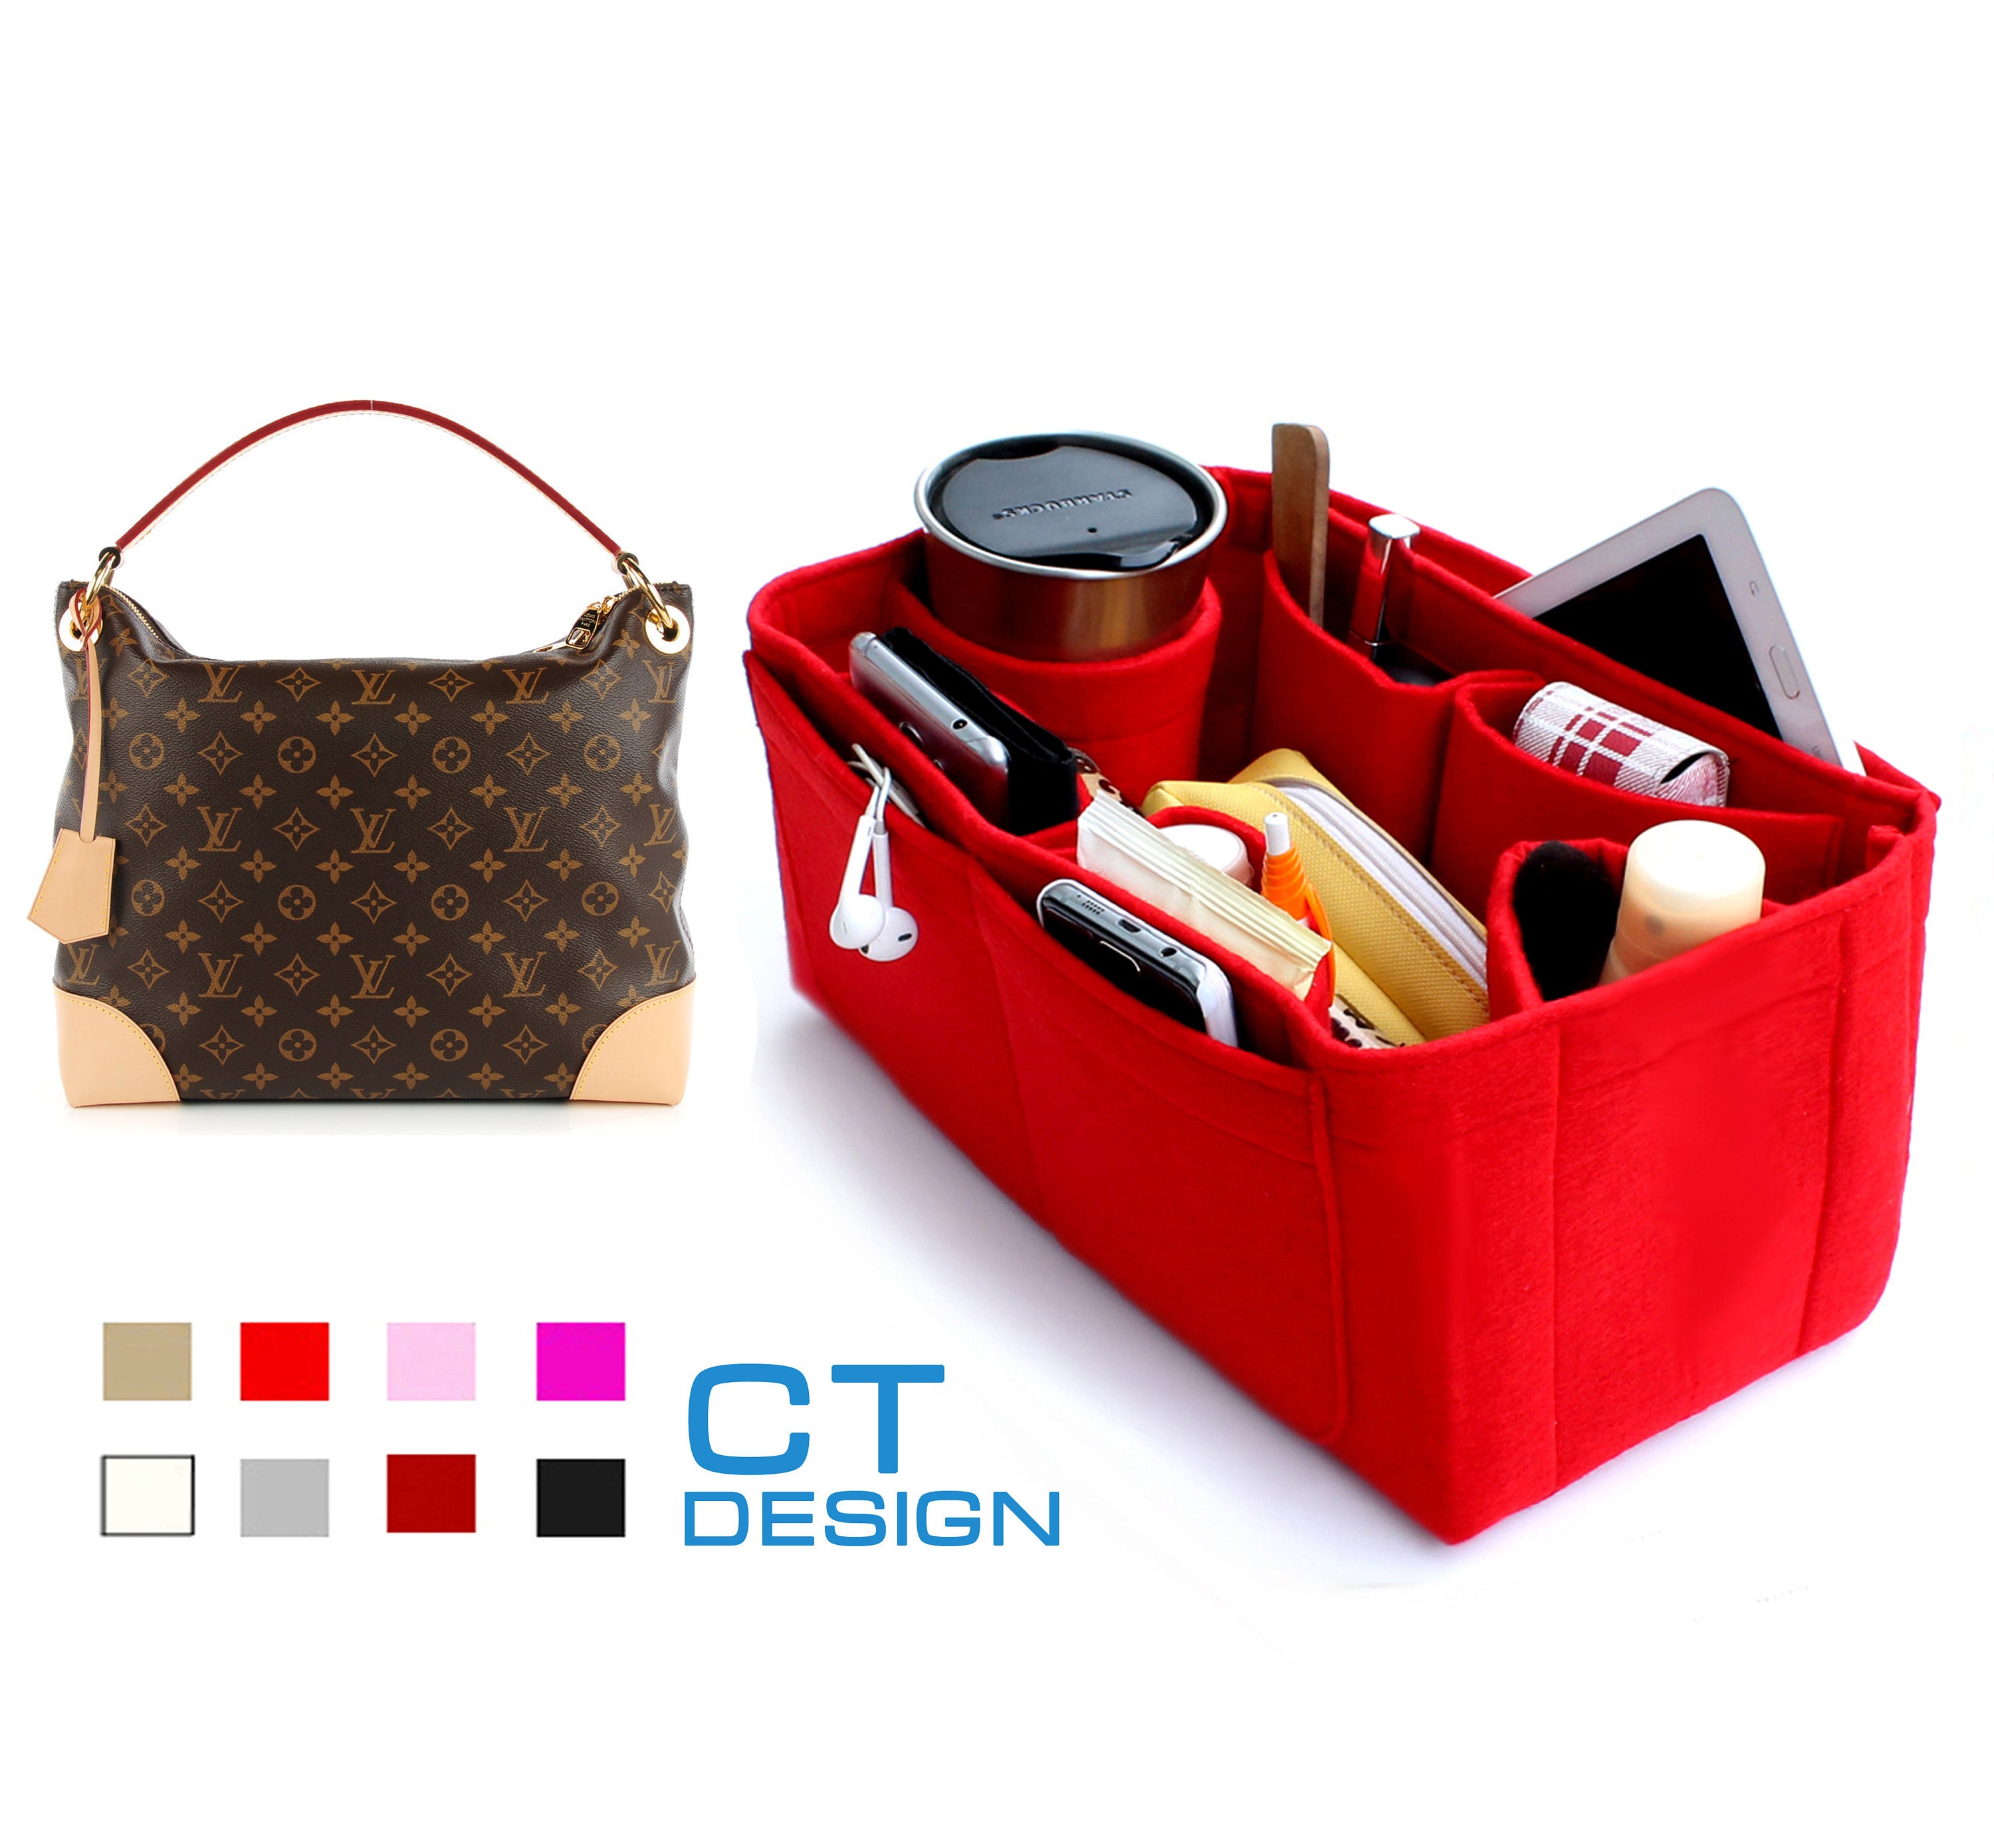 1-50/ LV-Delightful-PM1) Bag Organizer for LV Delightful PM - SAMORGA®  Perfect Bag Organizer